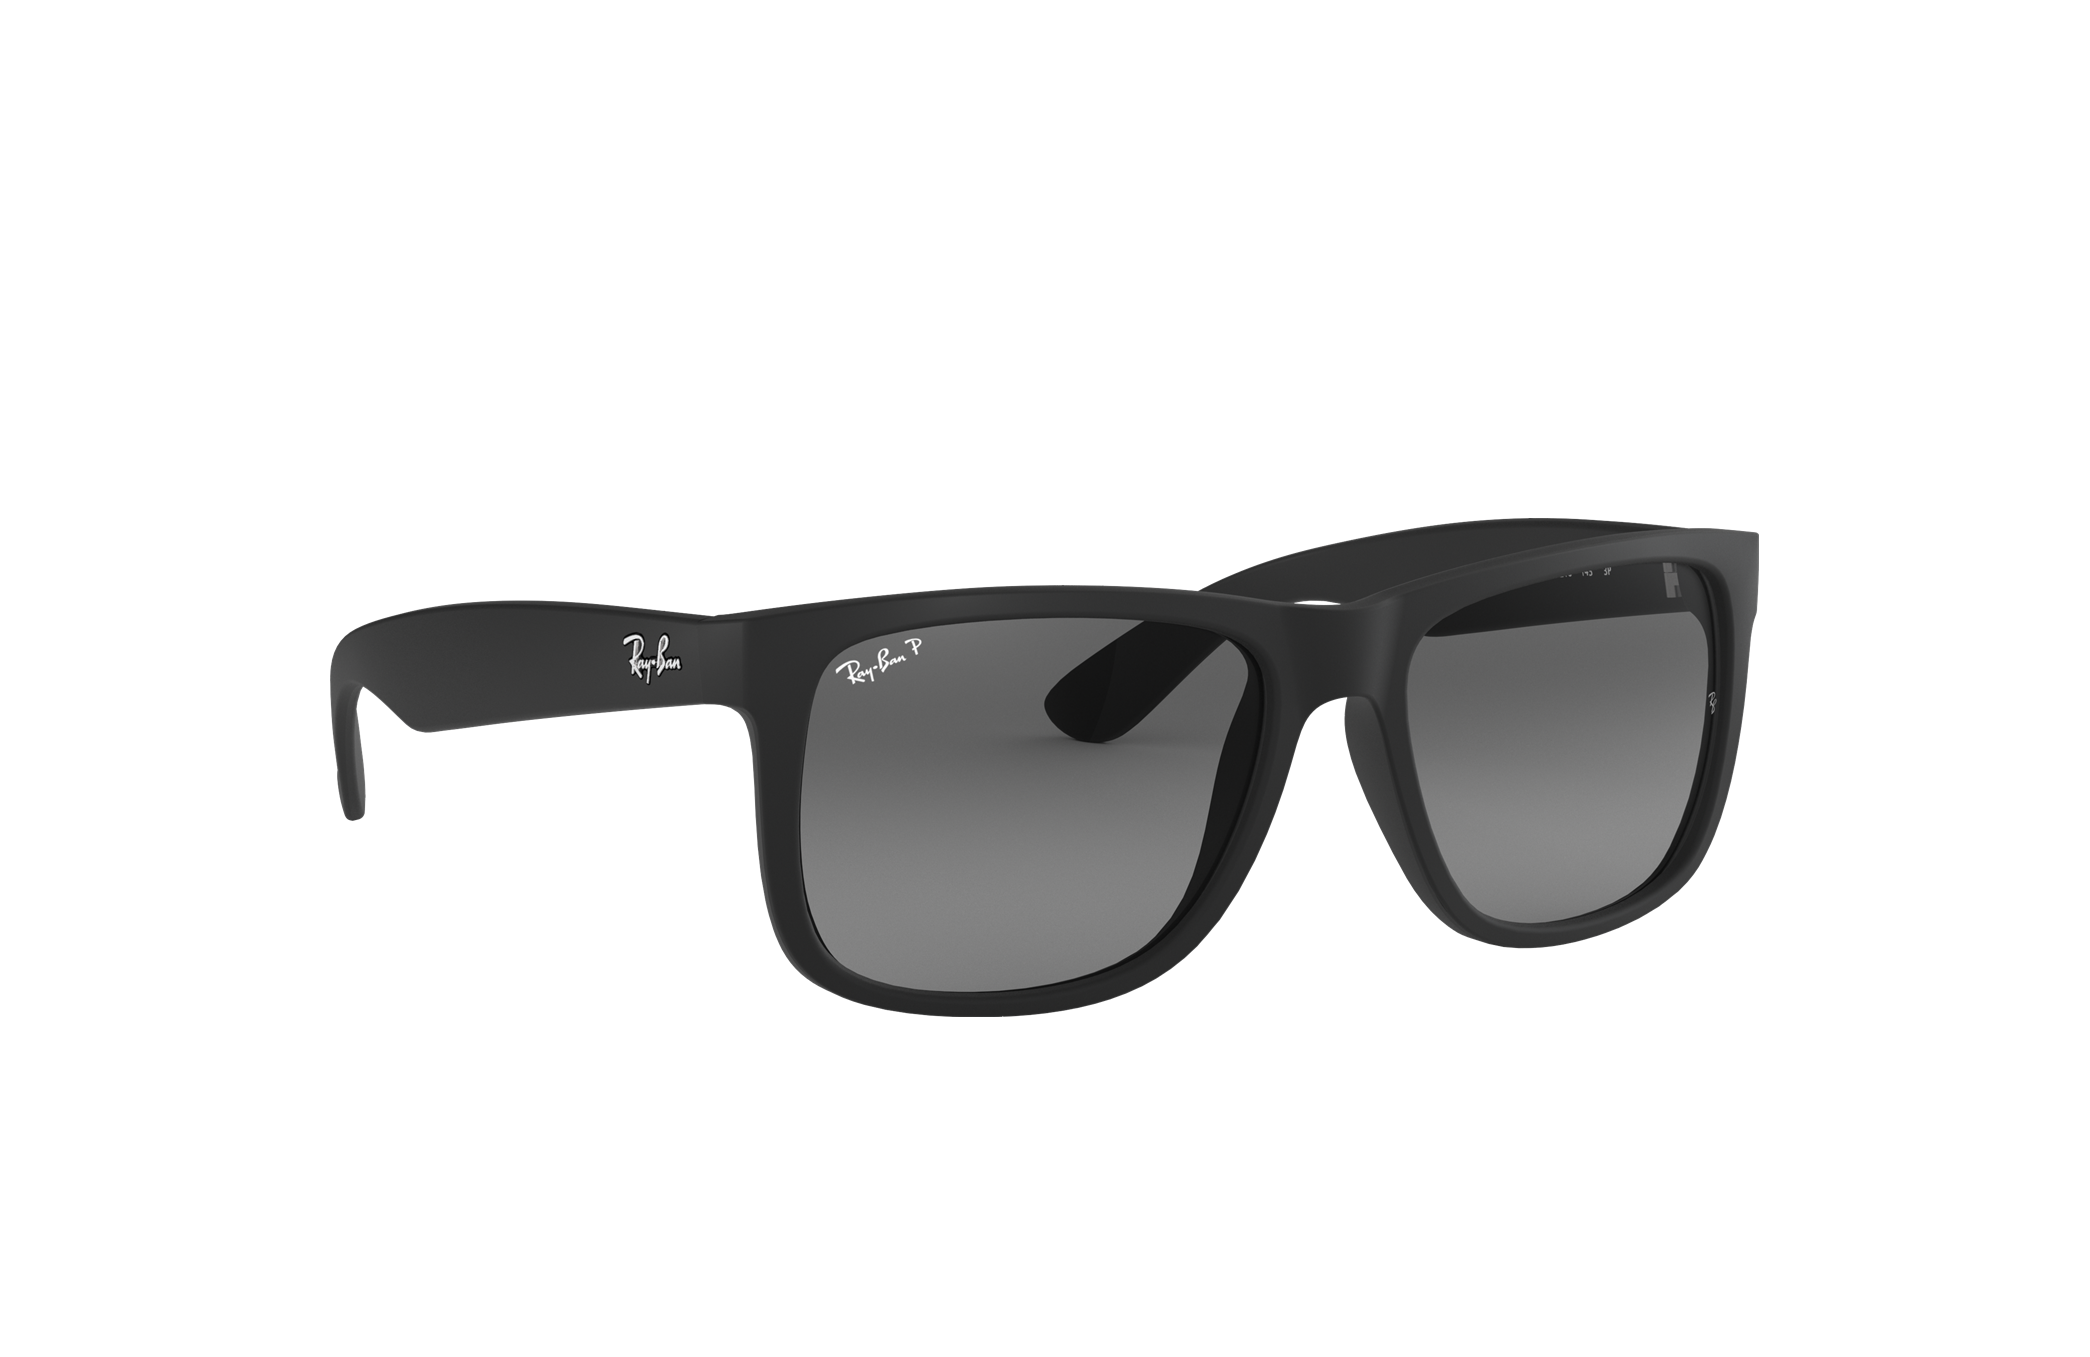 Ray-Ban Black Rubberised Square Sunglasses Rb4165 54 for Men Mens Accessories Sunglasses Save 23% 